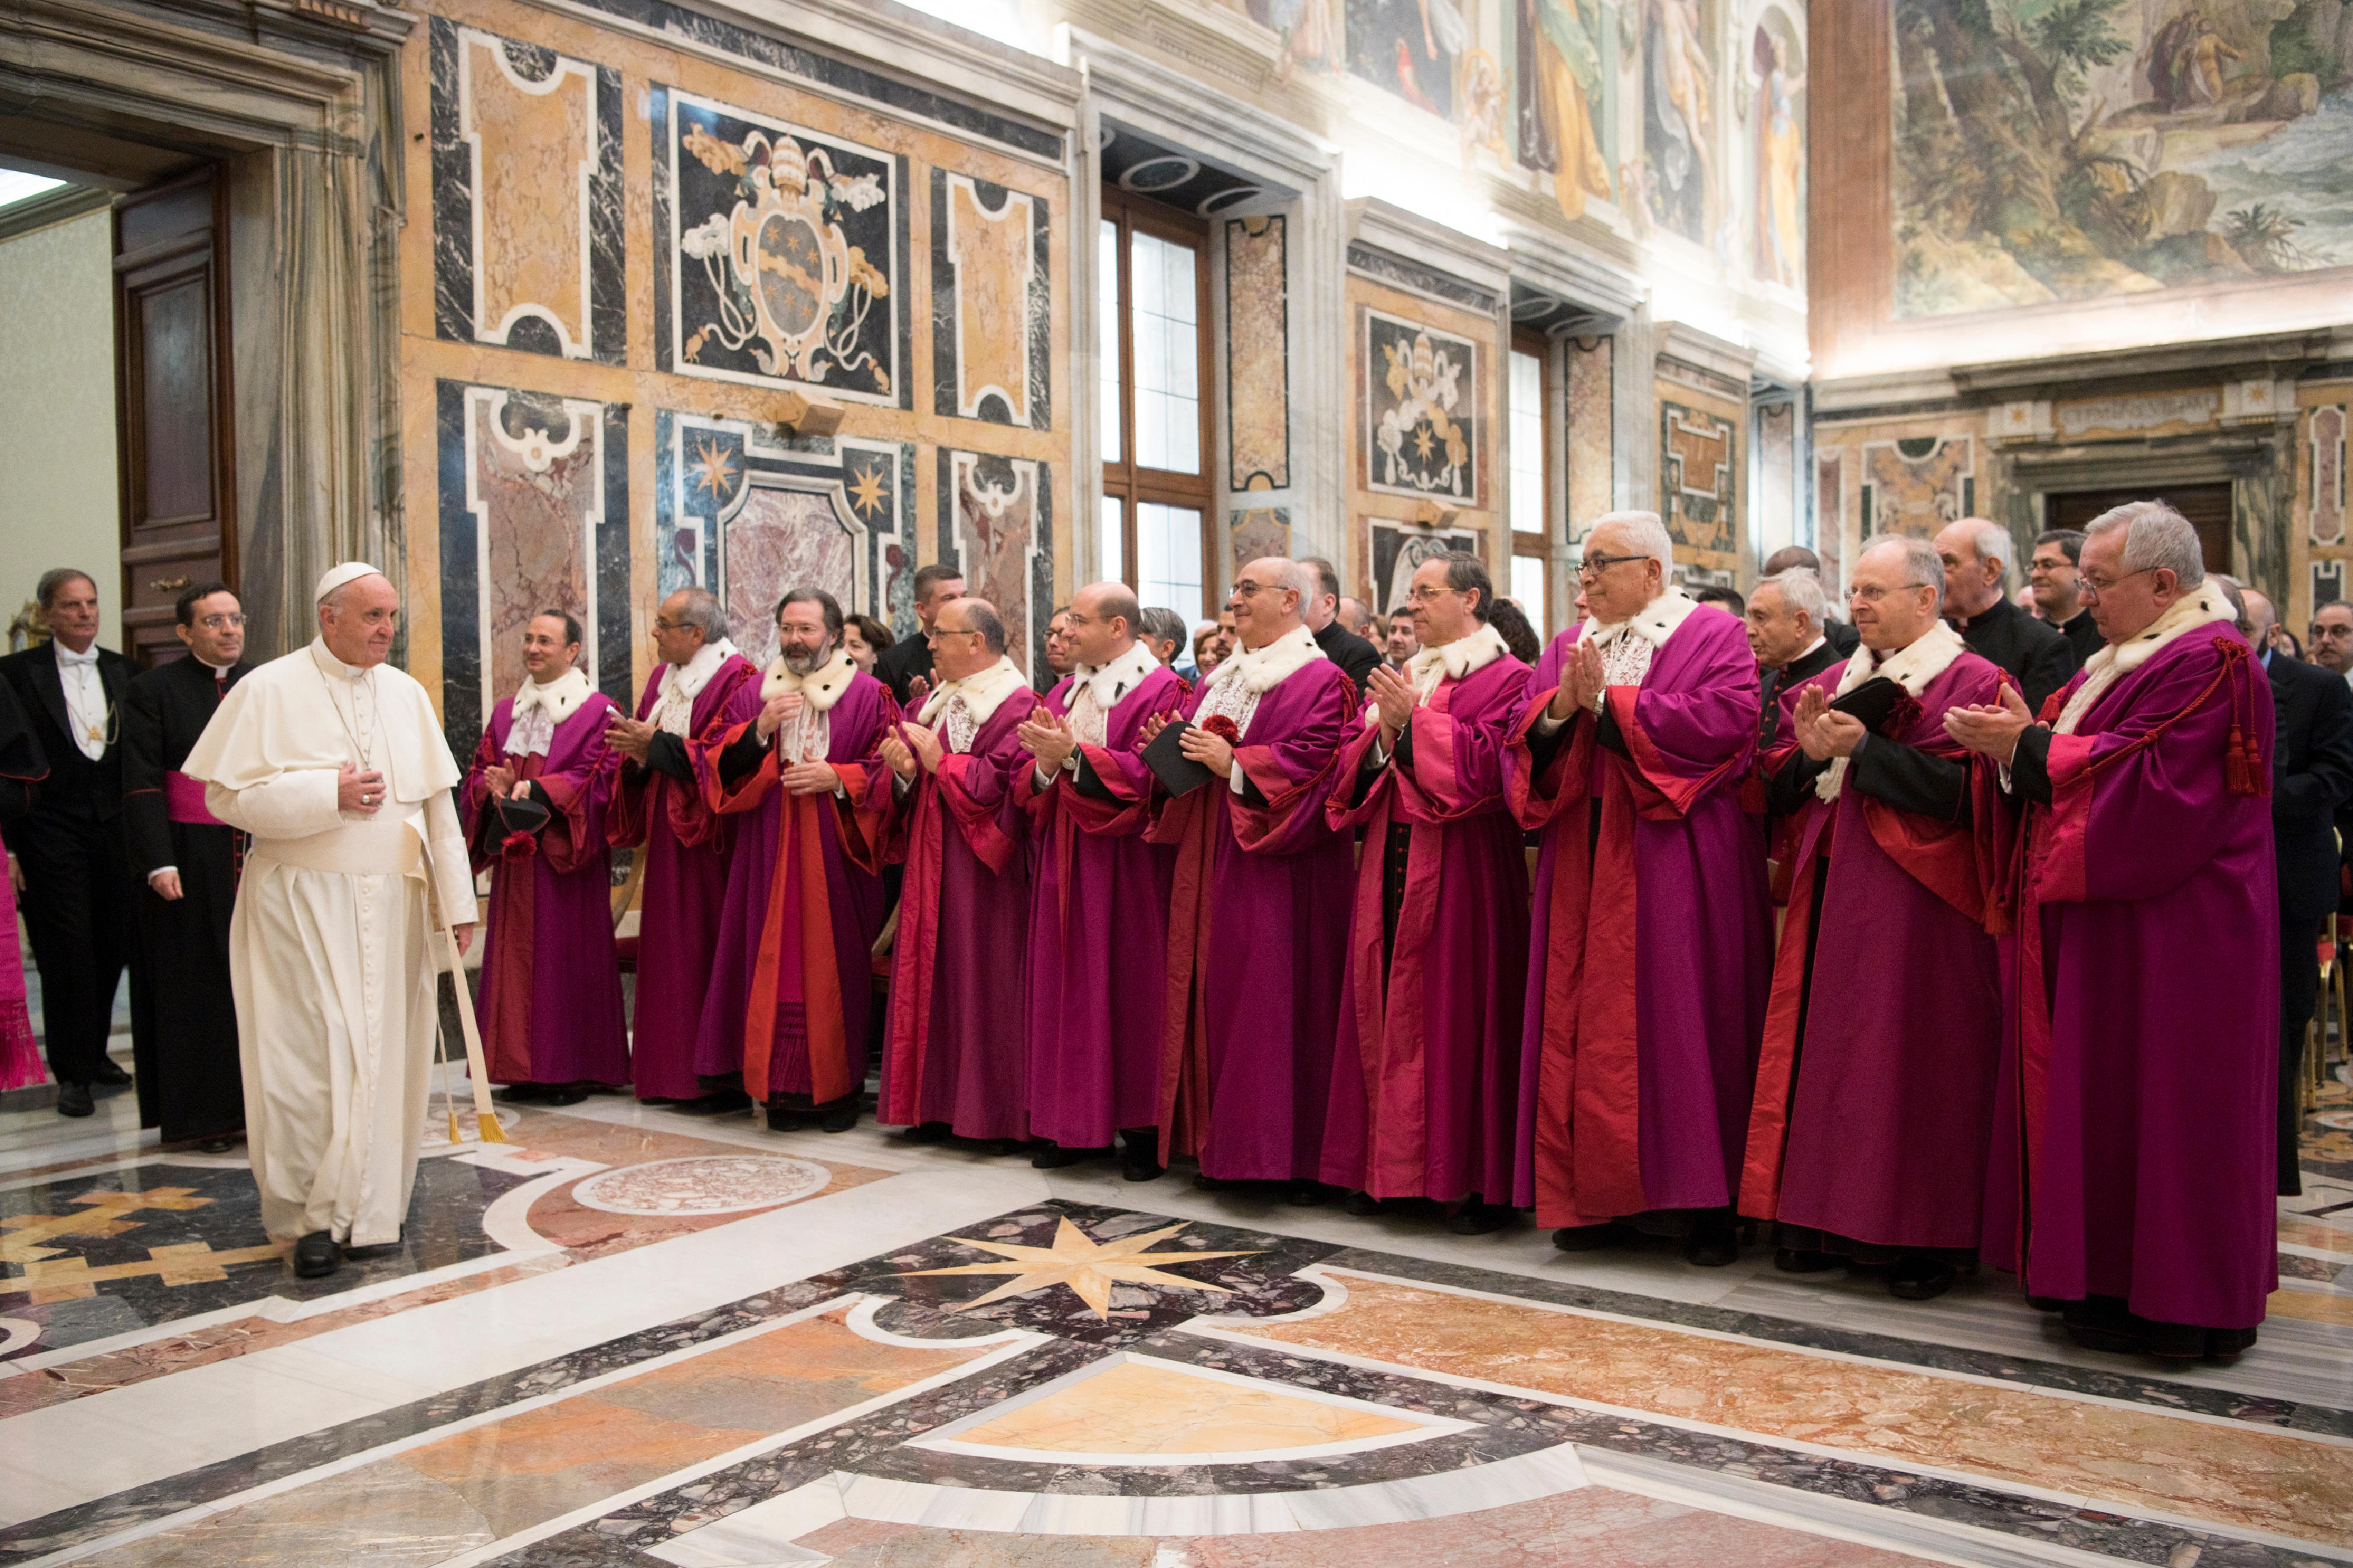 Inauguration de l'année judiciaire de la Rote romaine © Vatican Media